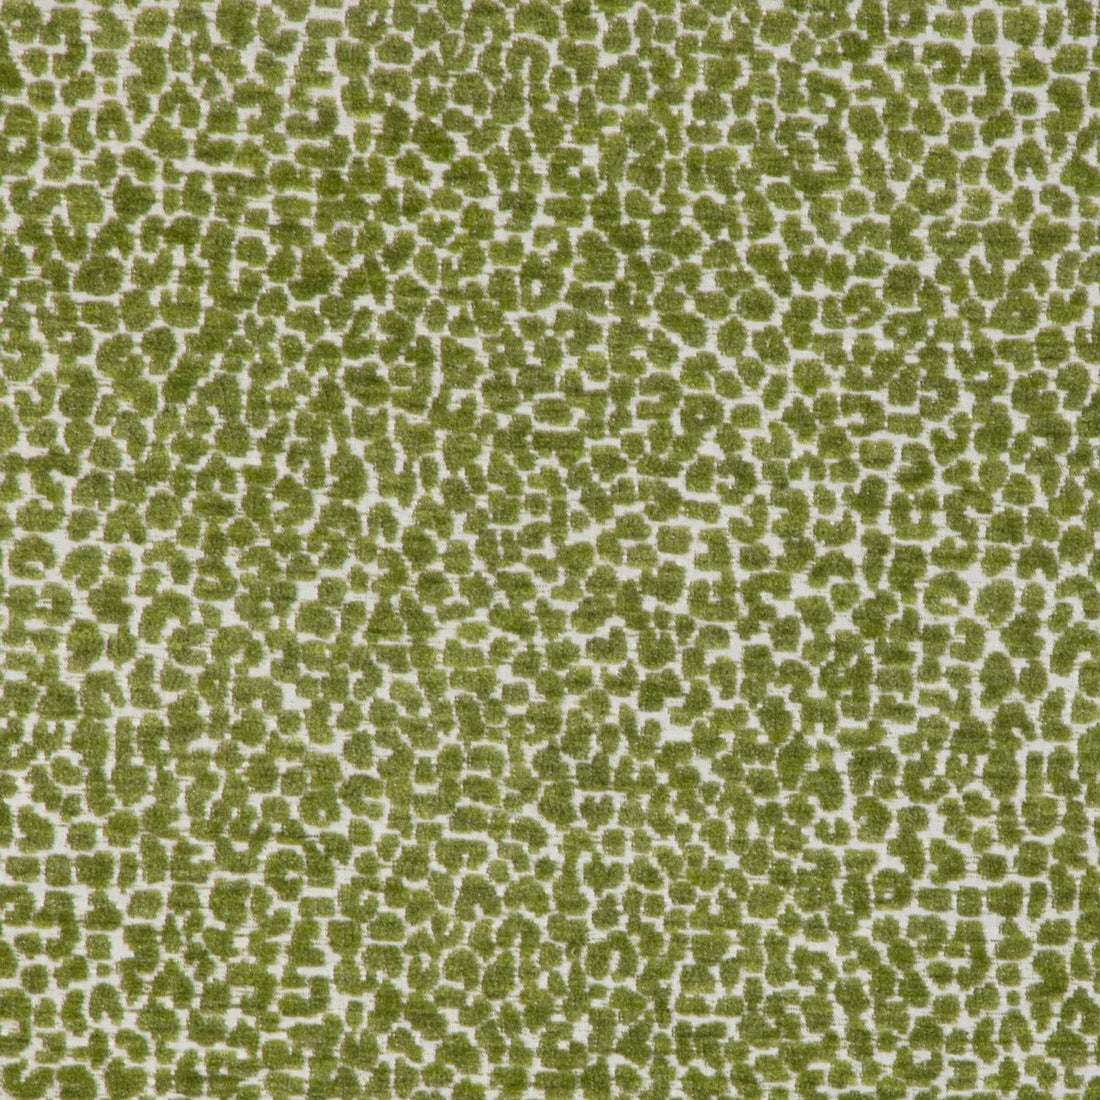 Kravet Design fabric in 36777-3 color - pattern 36777.3.0 - by Kravet Design in the Sea Island Indoor/Outdoor collection